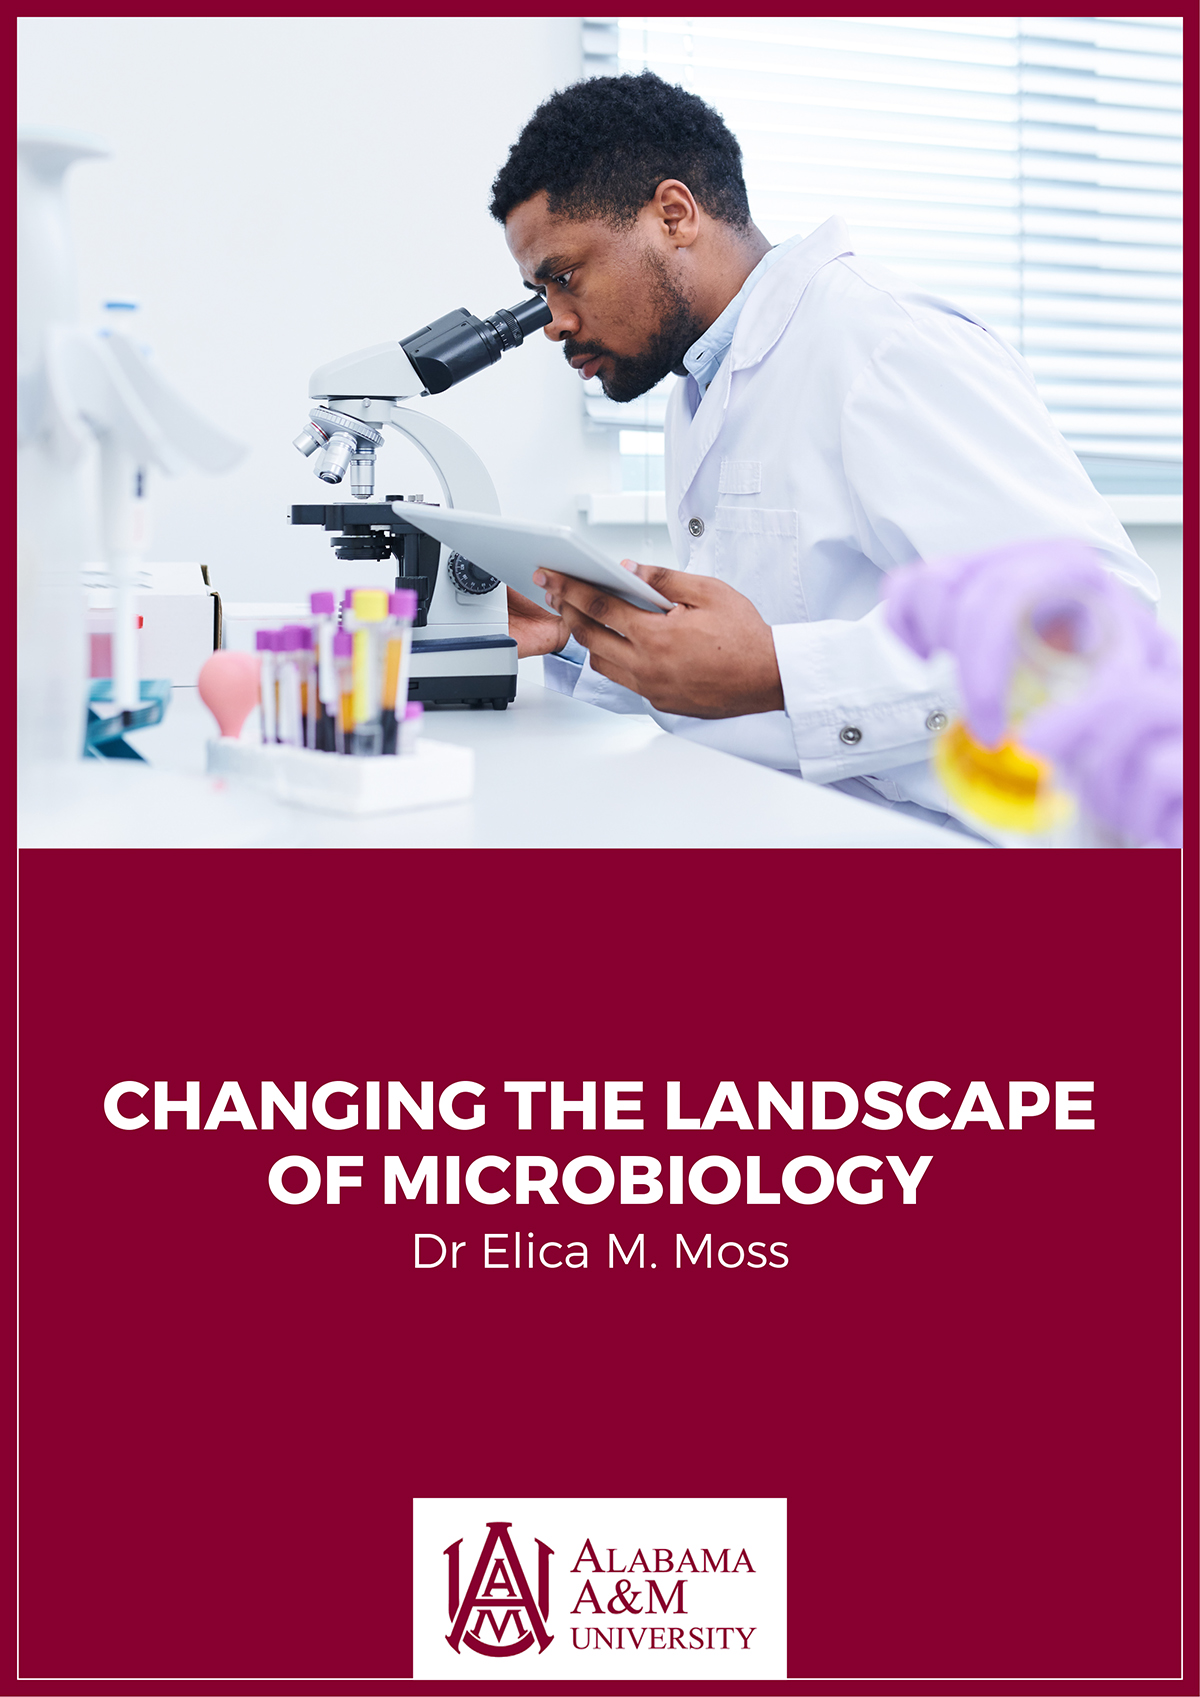 landscape of microbiology, dr elica moss